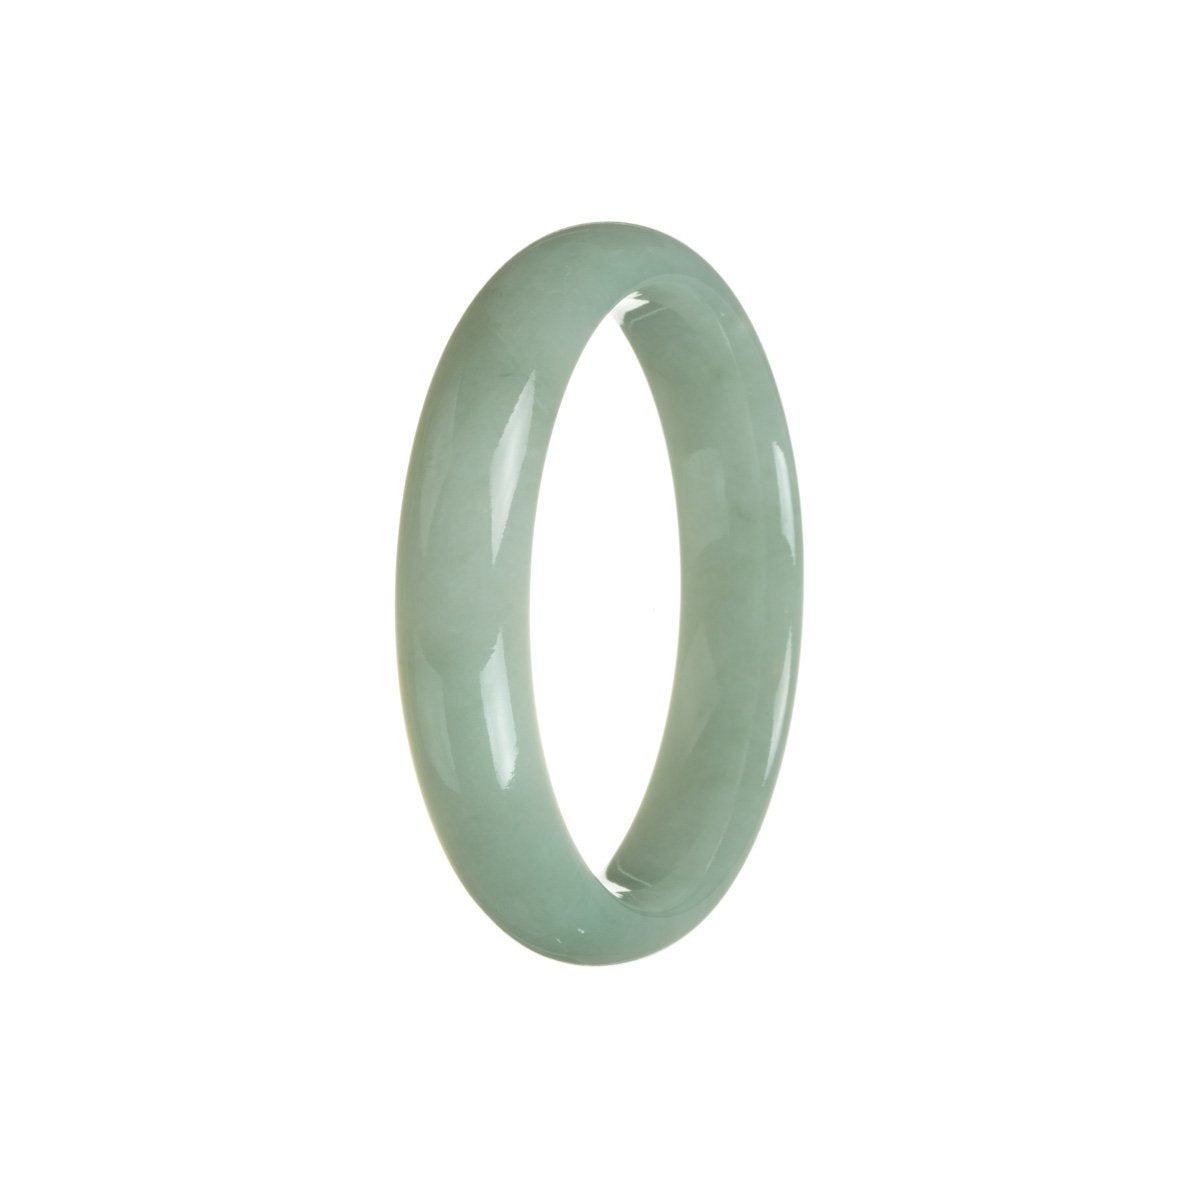 Real Grade A Green Jadeite Bangle Bracelet - 56mm Half Moon